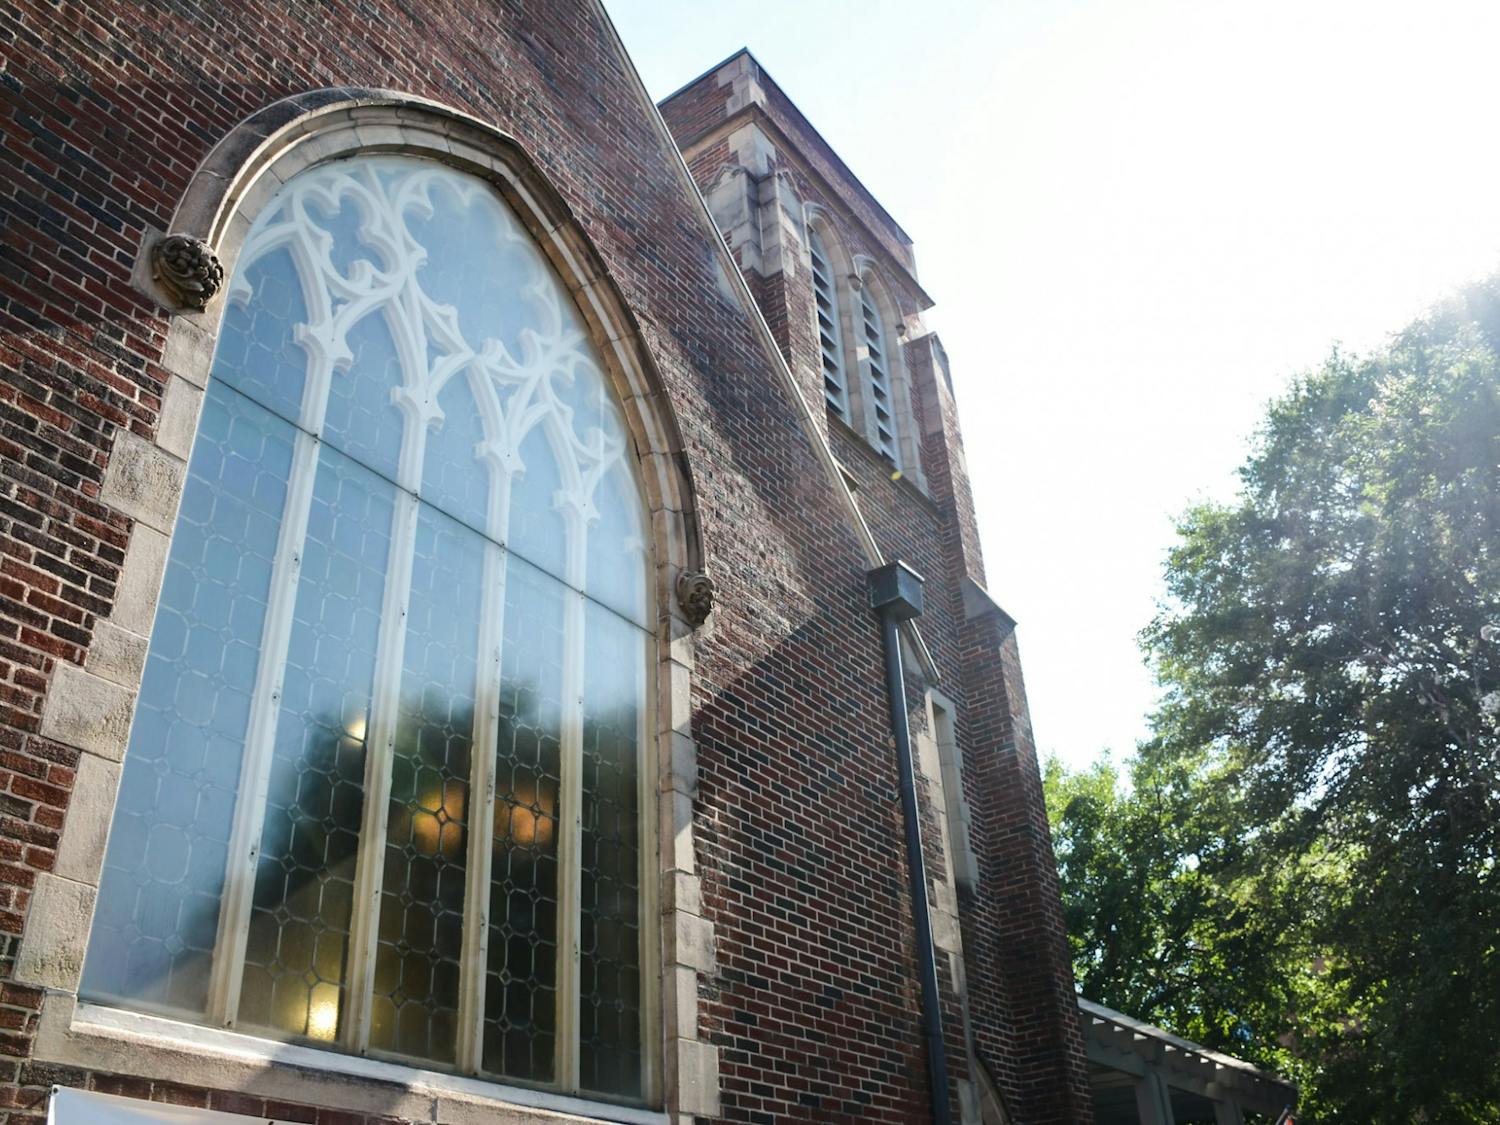 Saint Dunstan Episcopal Church